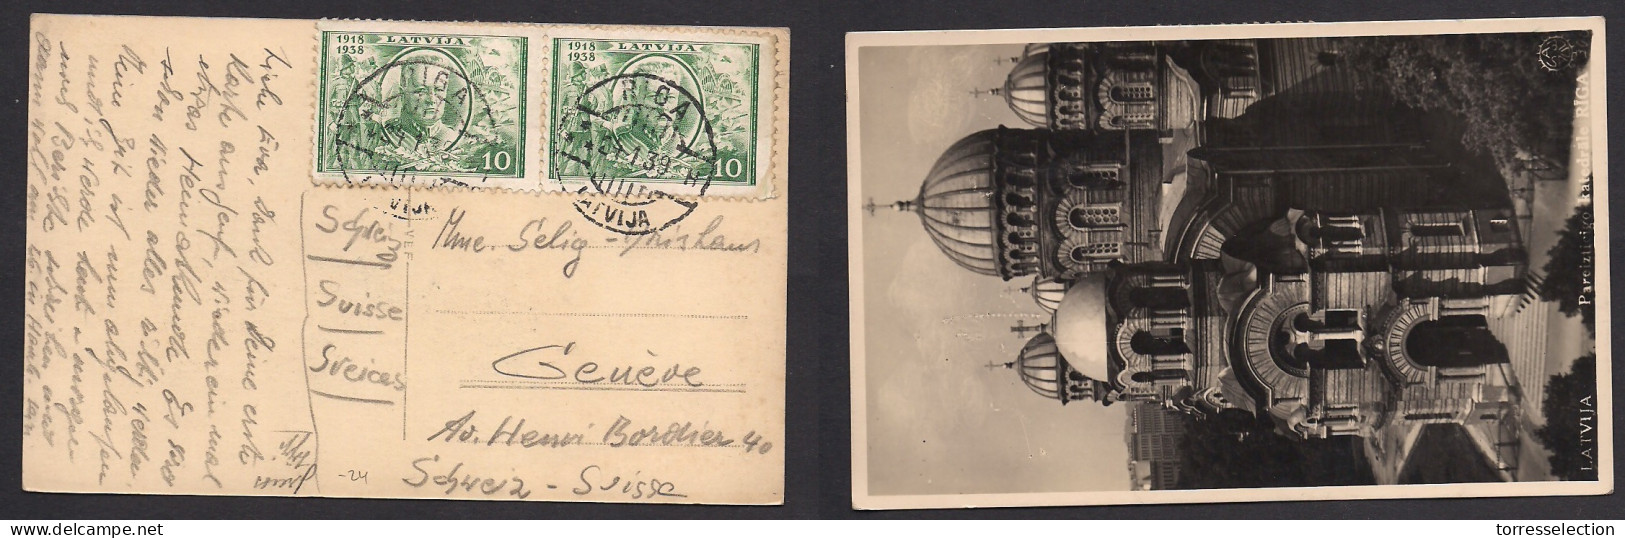 LATVIA. 1939 (24 Jan) Riga - Switzerland, Geneve. Multifkd Pcard. Fine Used. XSALE. - Letonia